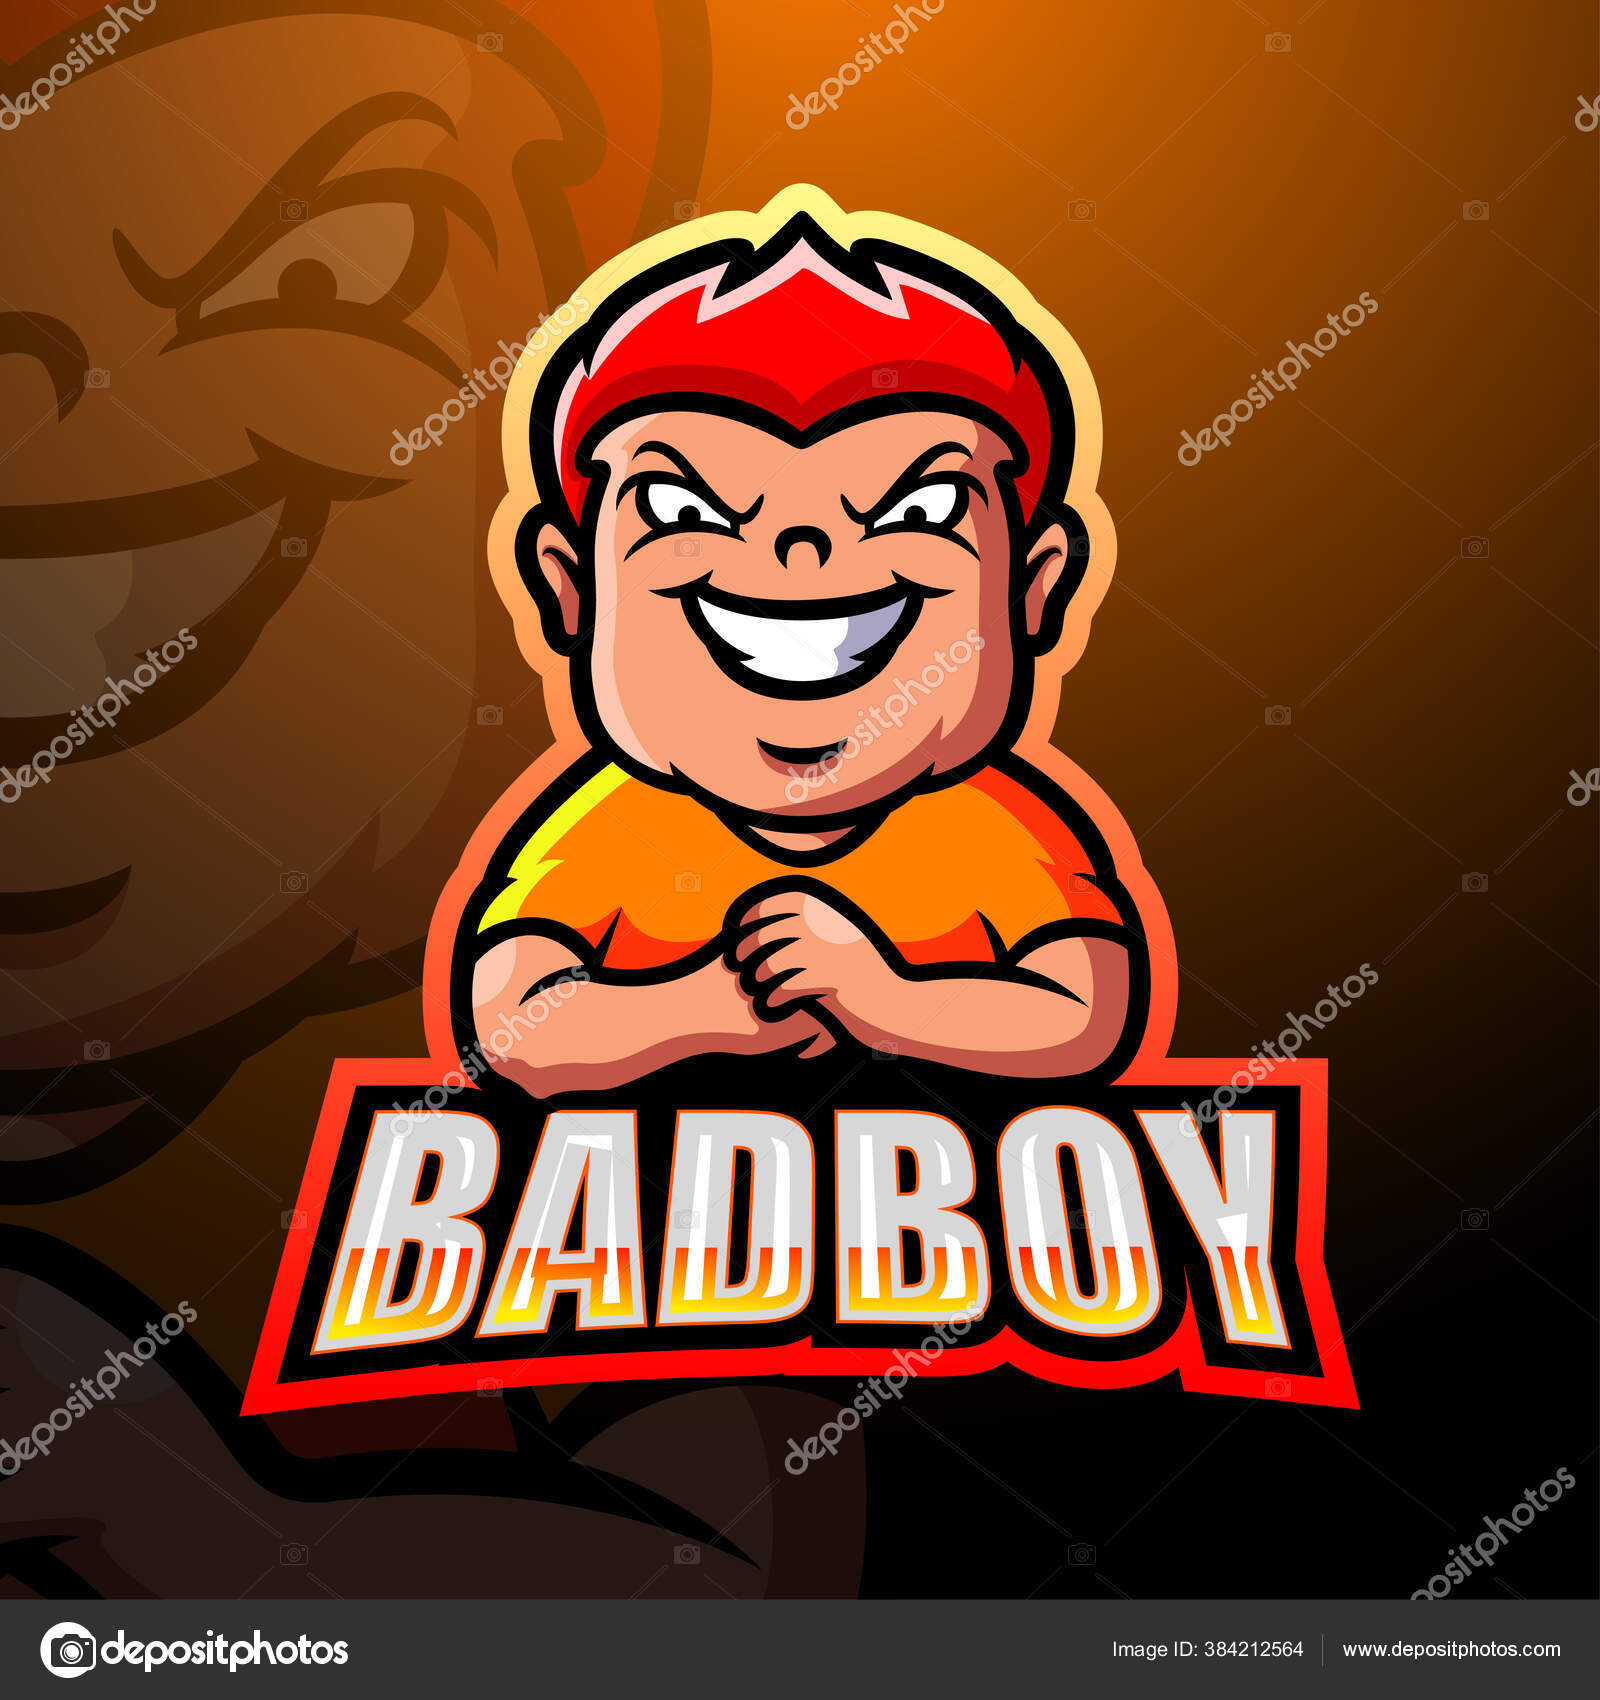 BaD BoY logo. Free logo maker.